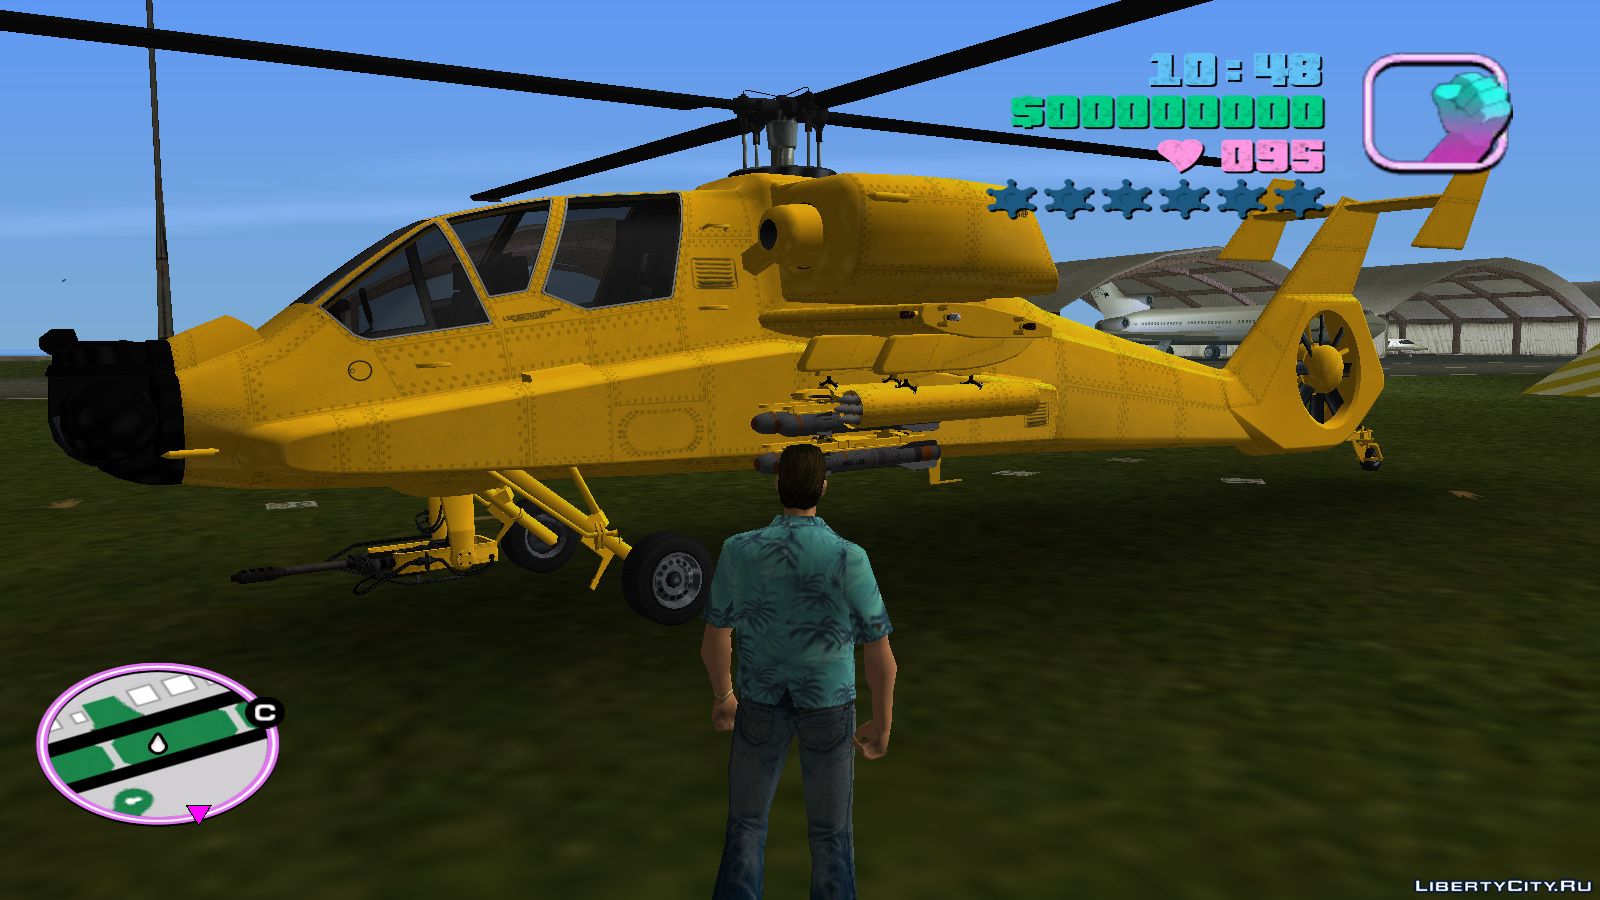 Игра гта вертолет. GTA vice City вертолет. GTA vice City Deluxe вертолет. Grand Theft auto: vice City вертолет. Chopper вертолёт ГТА Вайс Сити.